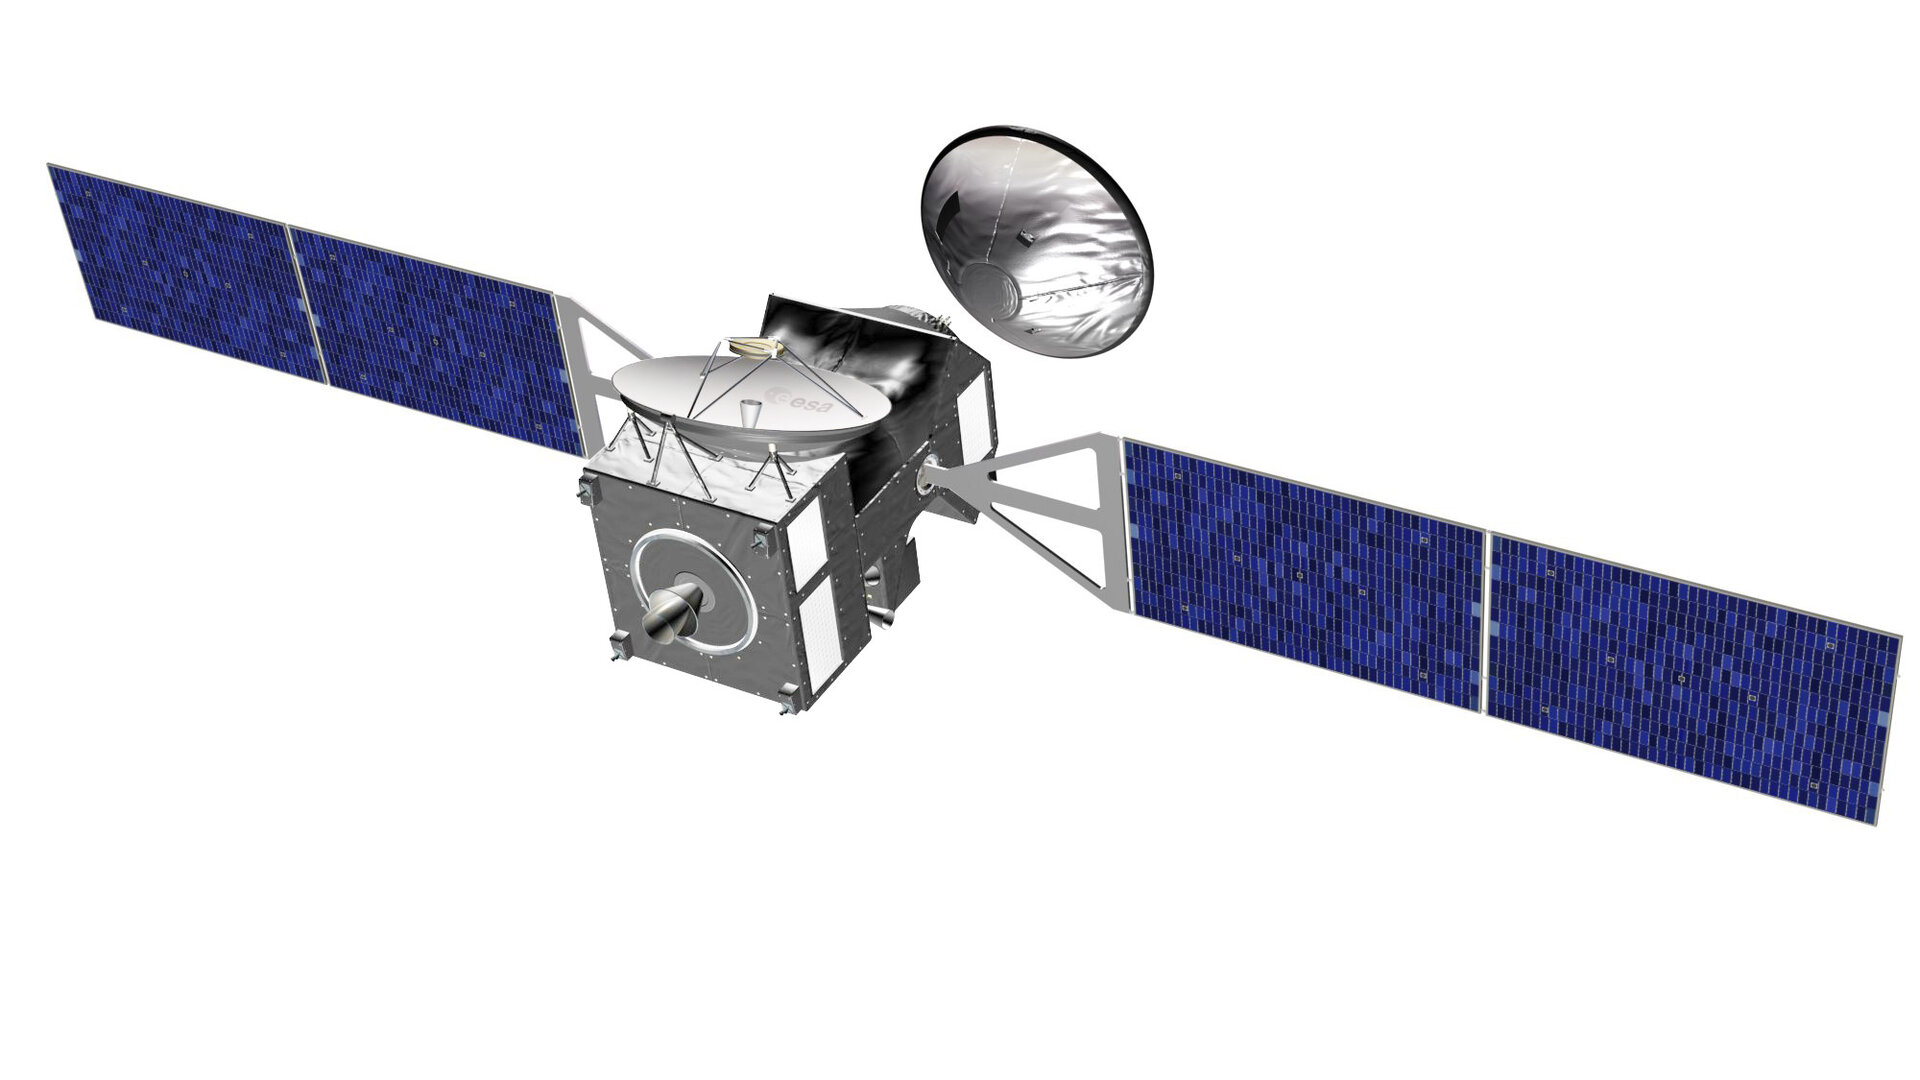 The ExoMars Trace Gas Orbiter